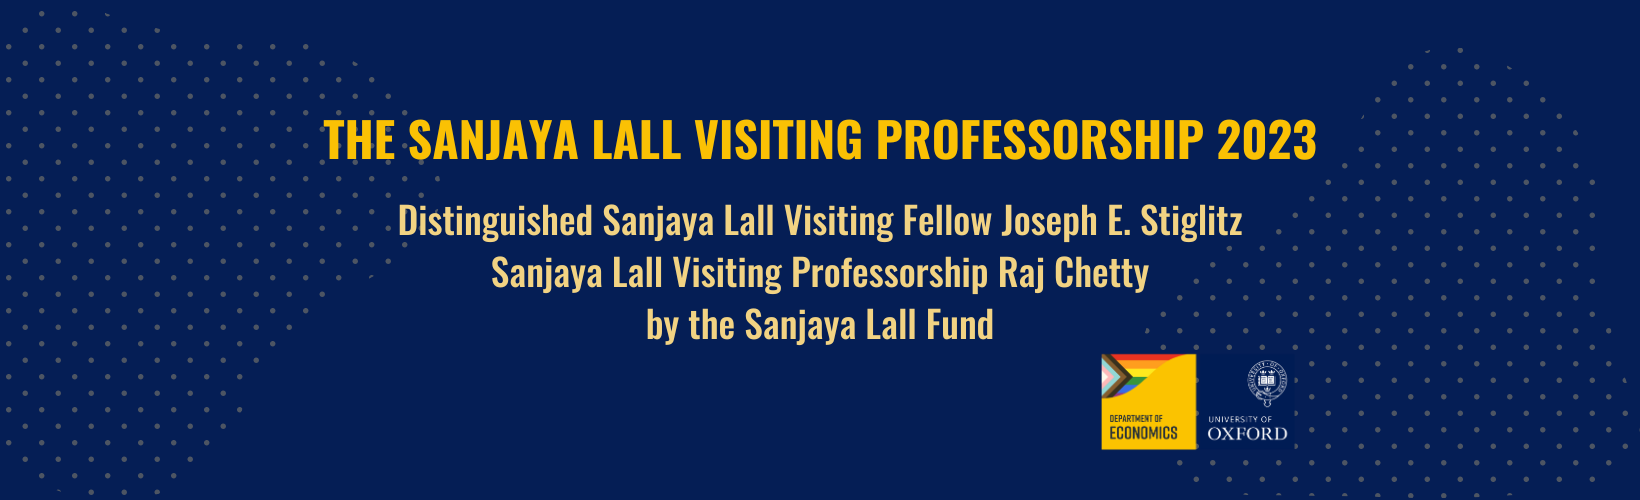 sanjaya lall webpage banner